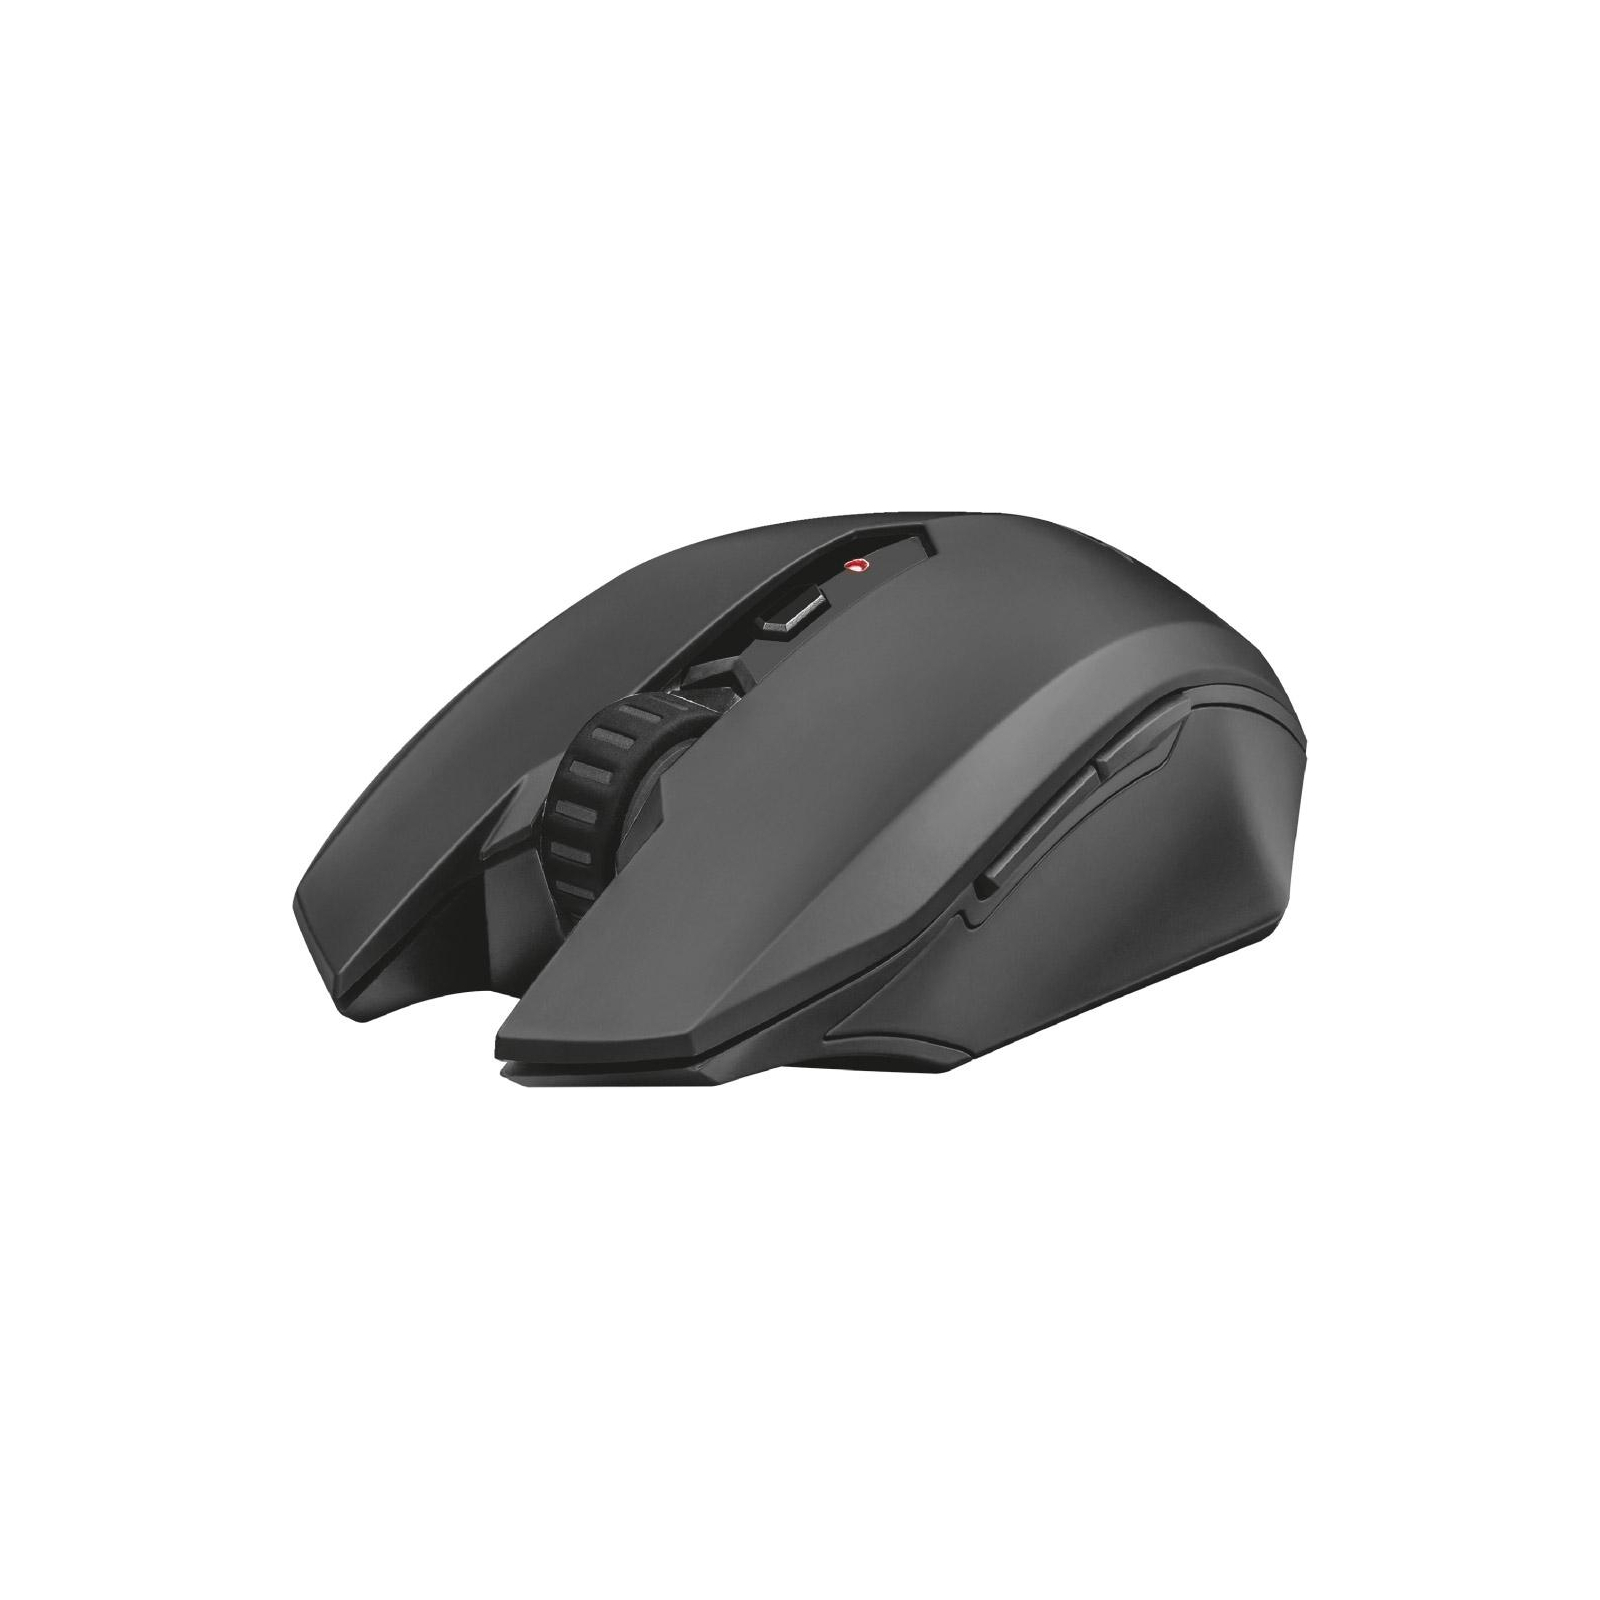 Мышка Trust GXT 115 Macci wireless gaming mouse (22417)